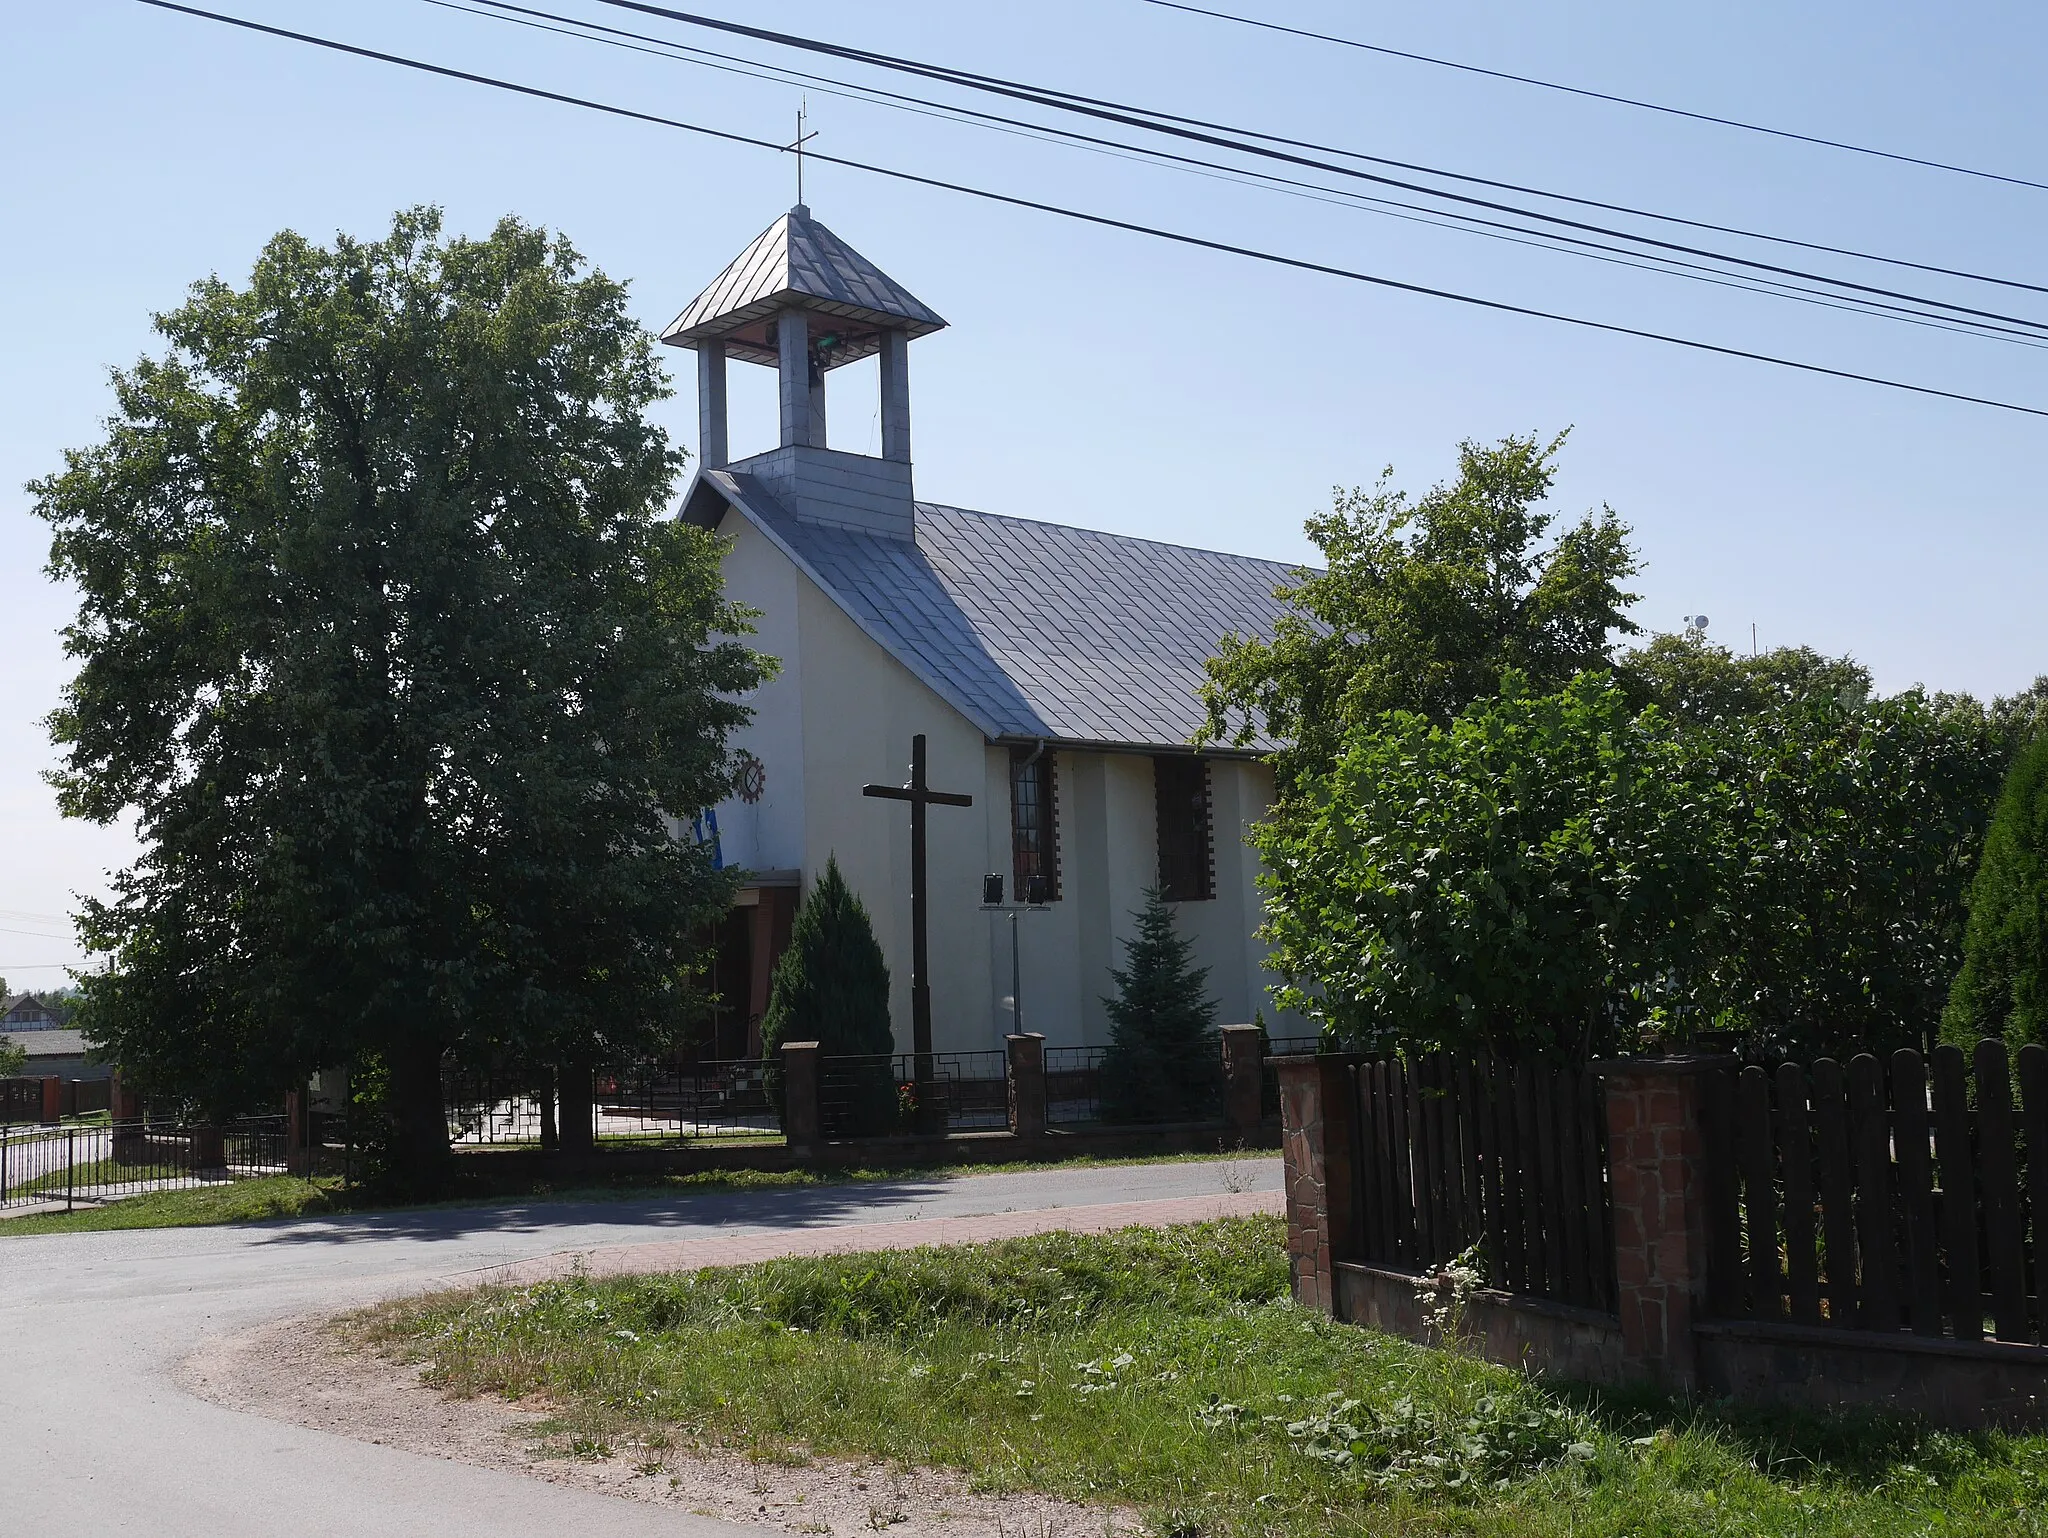 Photo showing: Church of Black Madonna in Szczecno